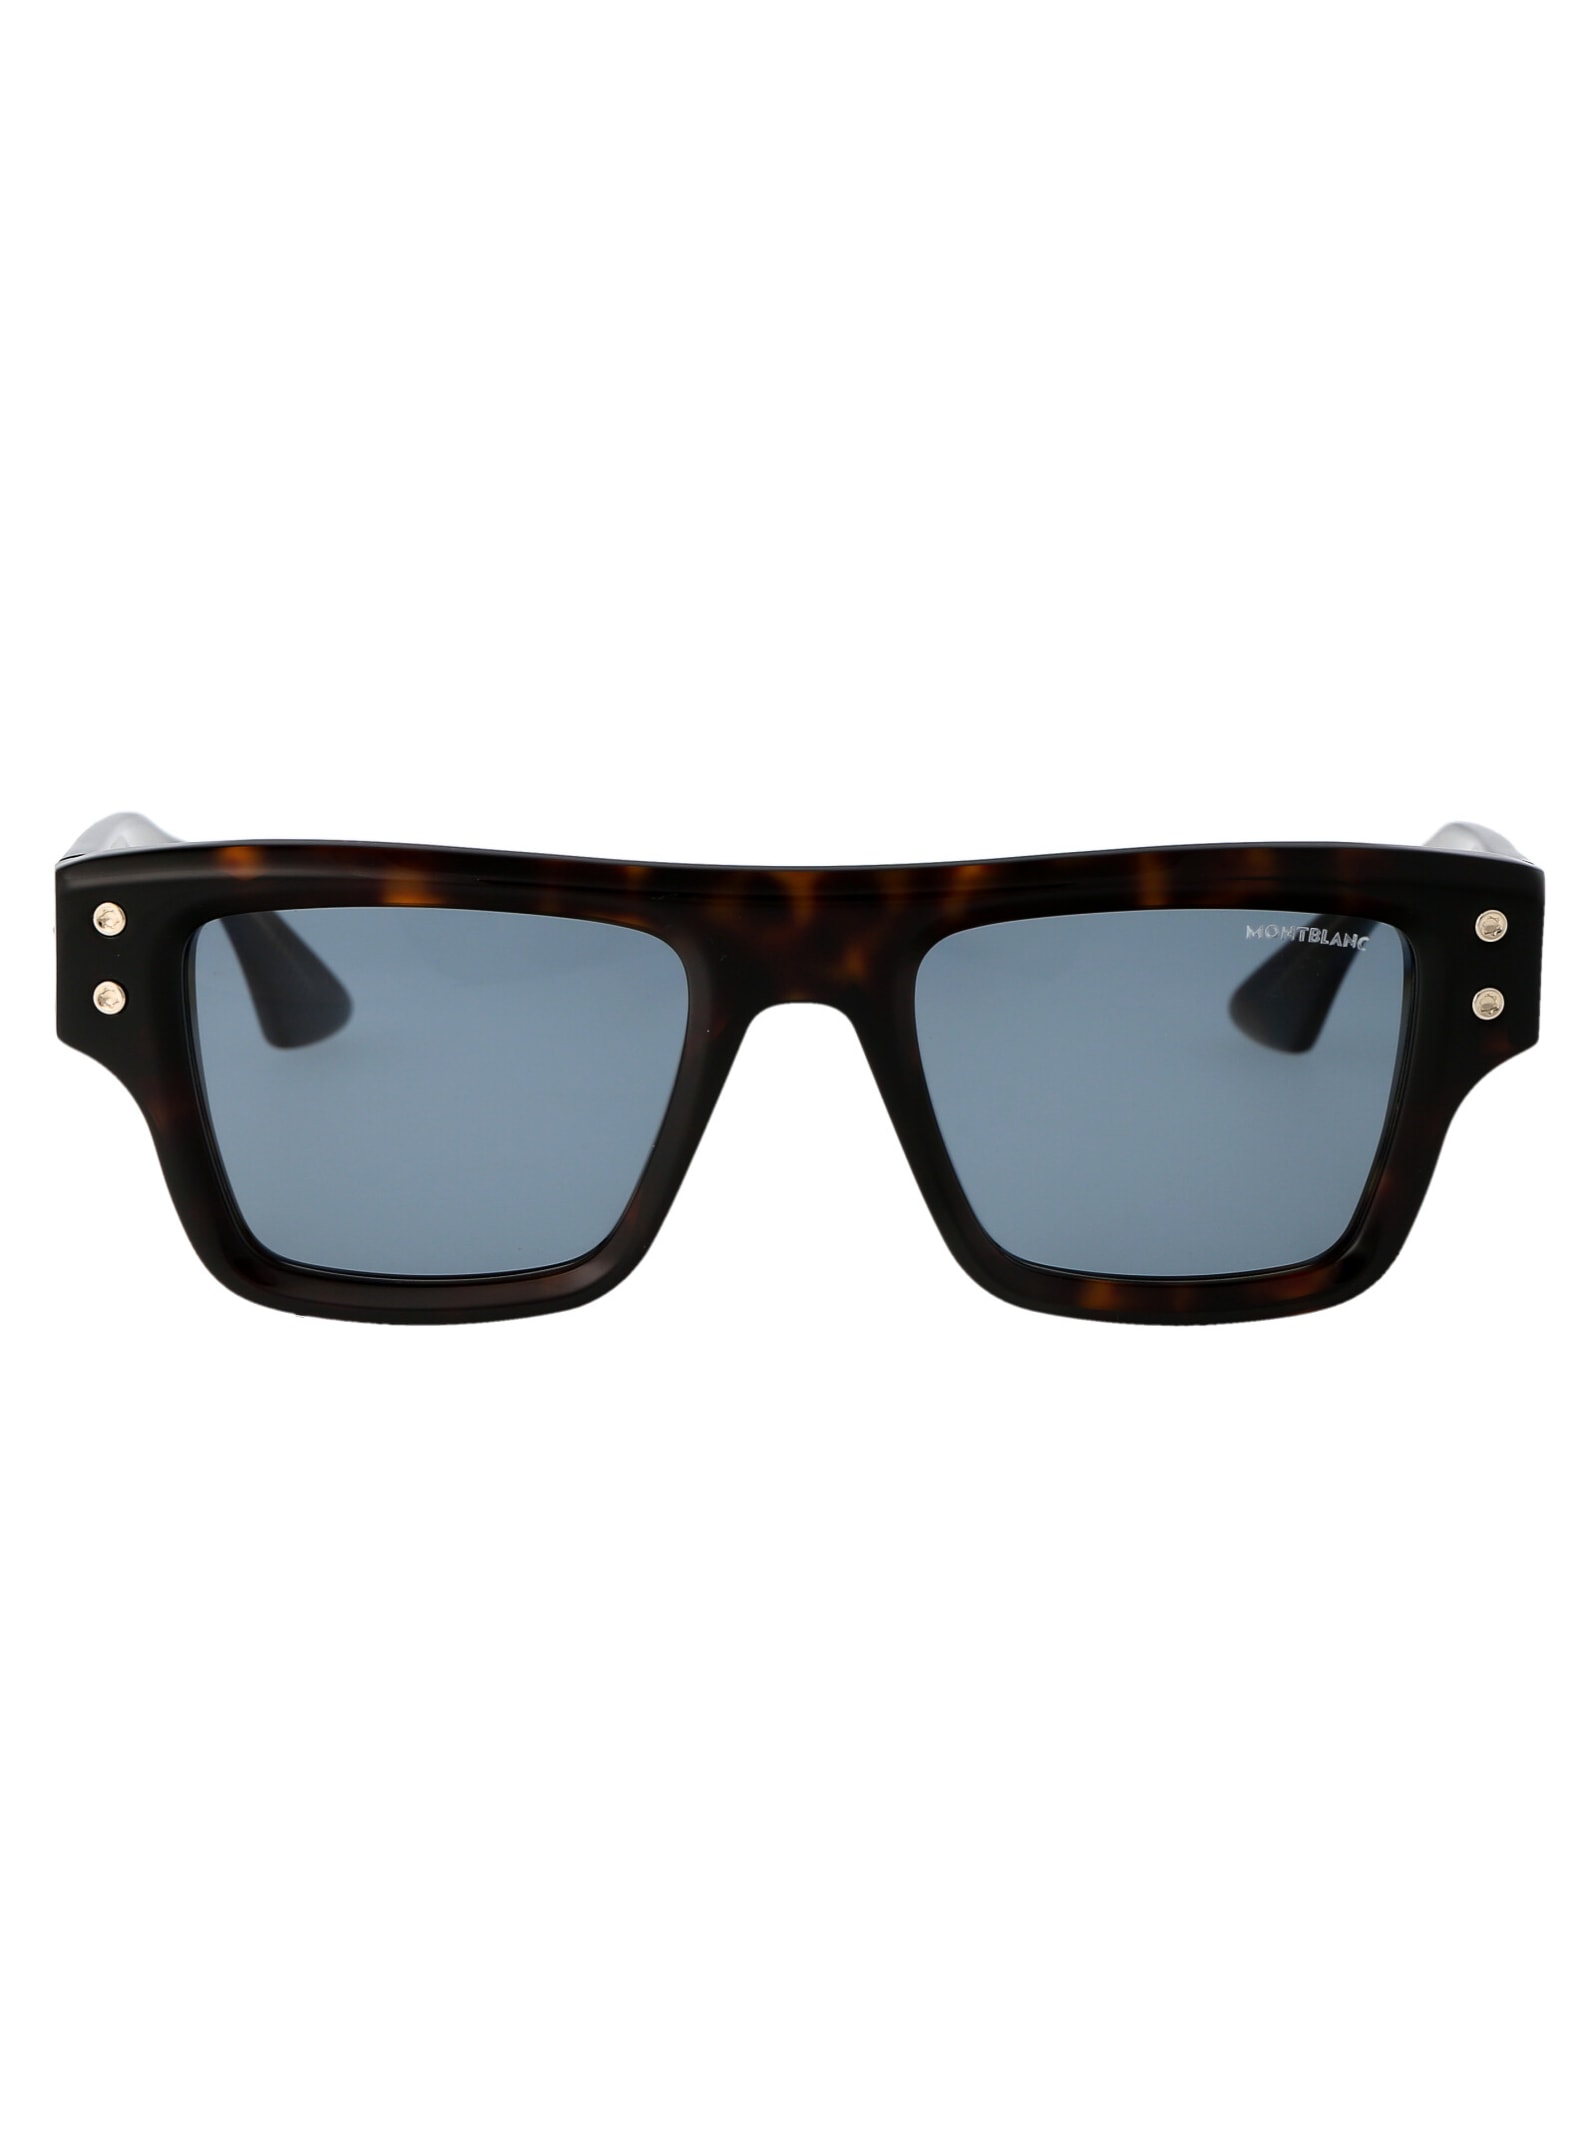 montblanc mb0253s sunglasses